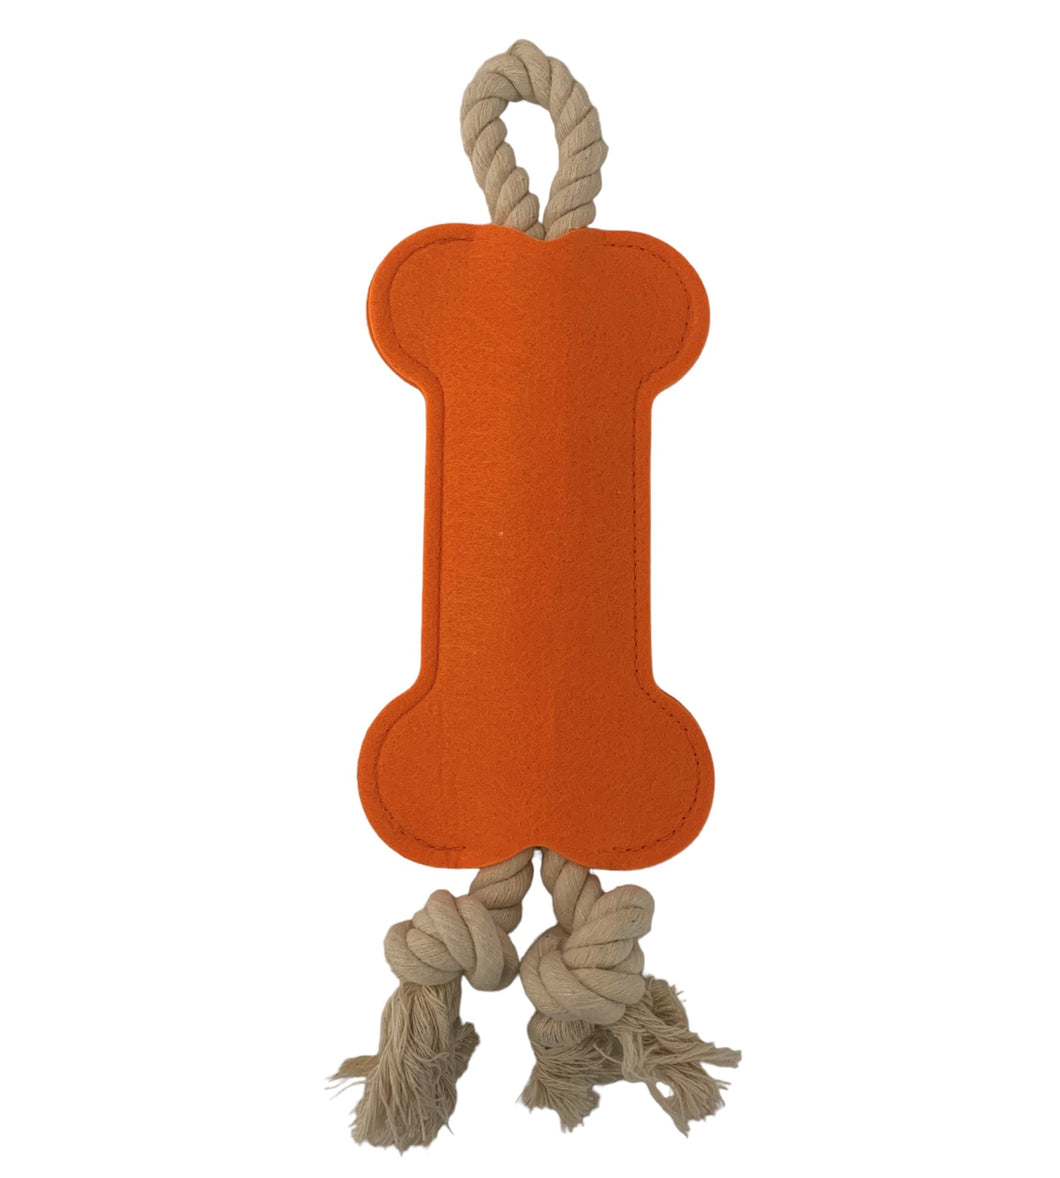 Hitch and Bone Seilspielzeug, orange